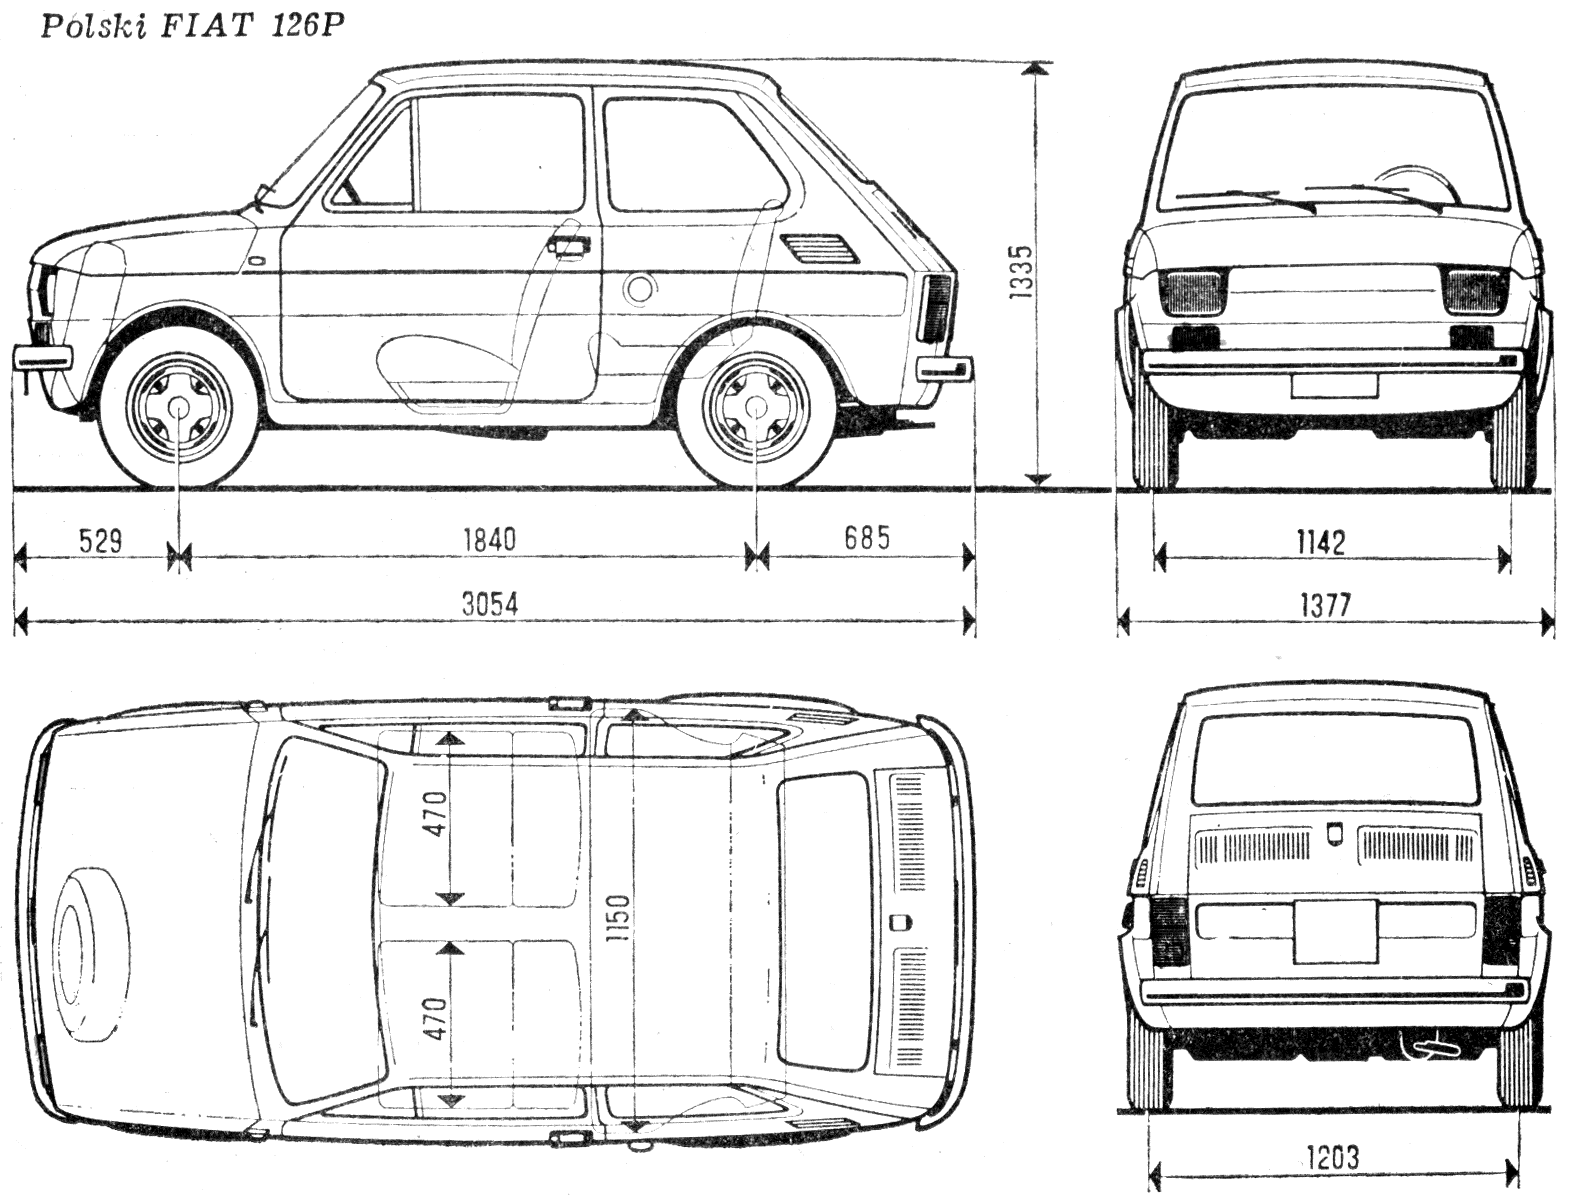 Polski Fiat 126p Blueprint Download free blueprint for